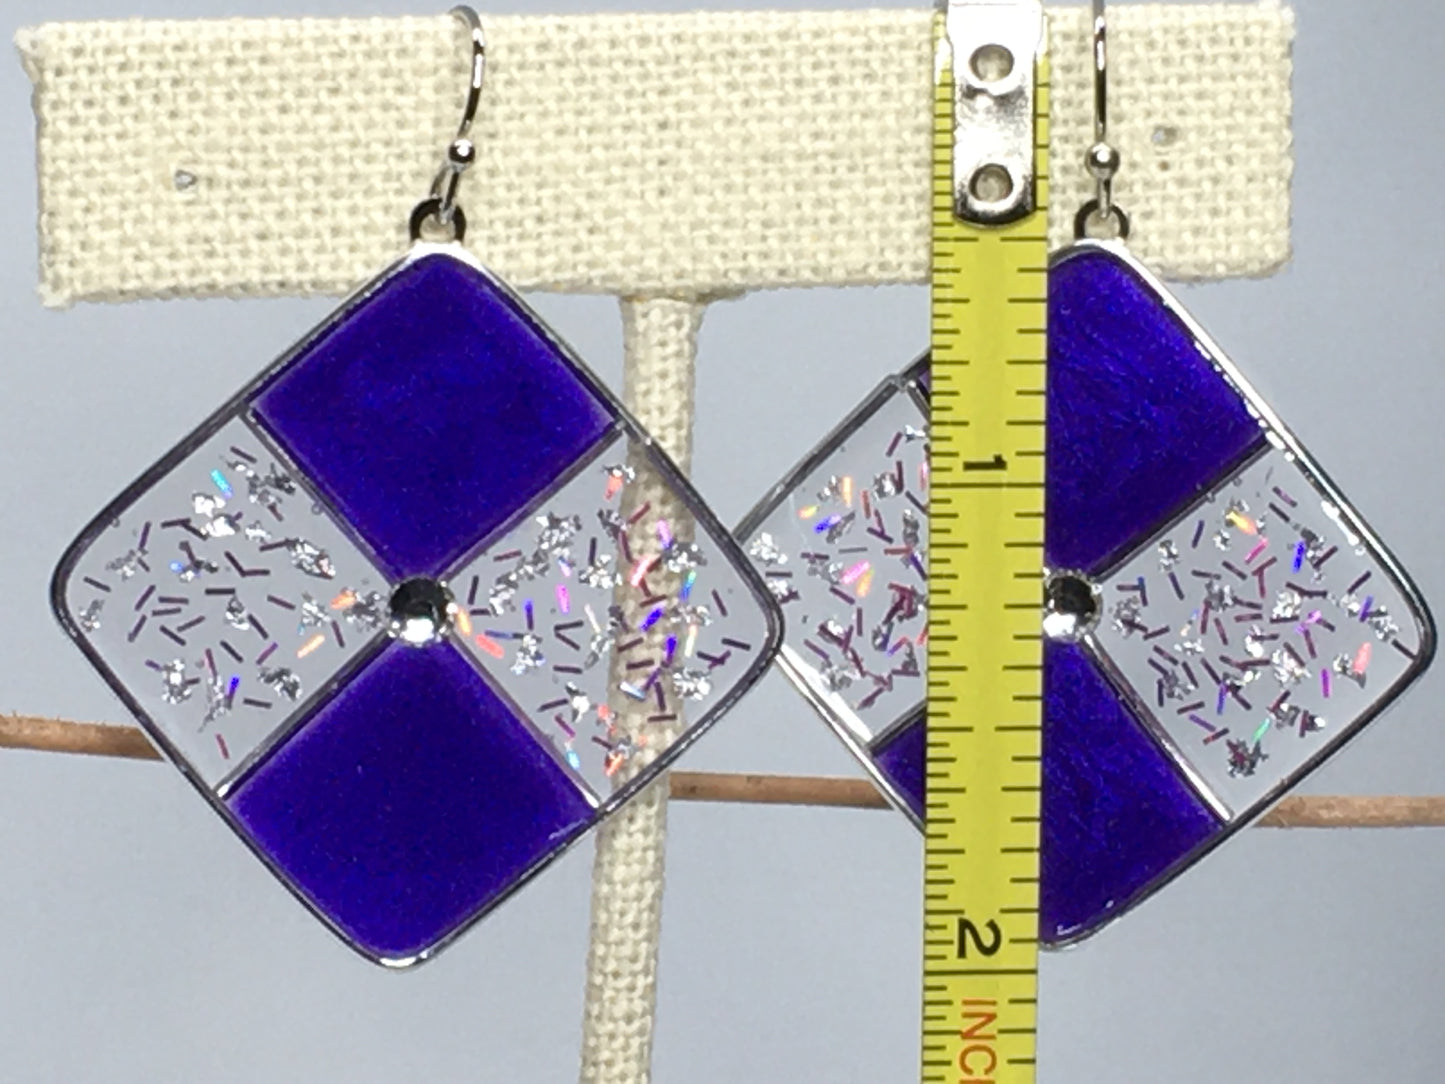 Purple and silver resin earrings